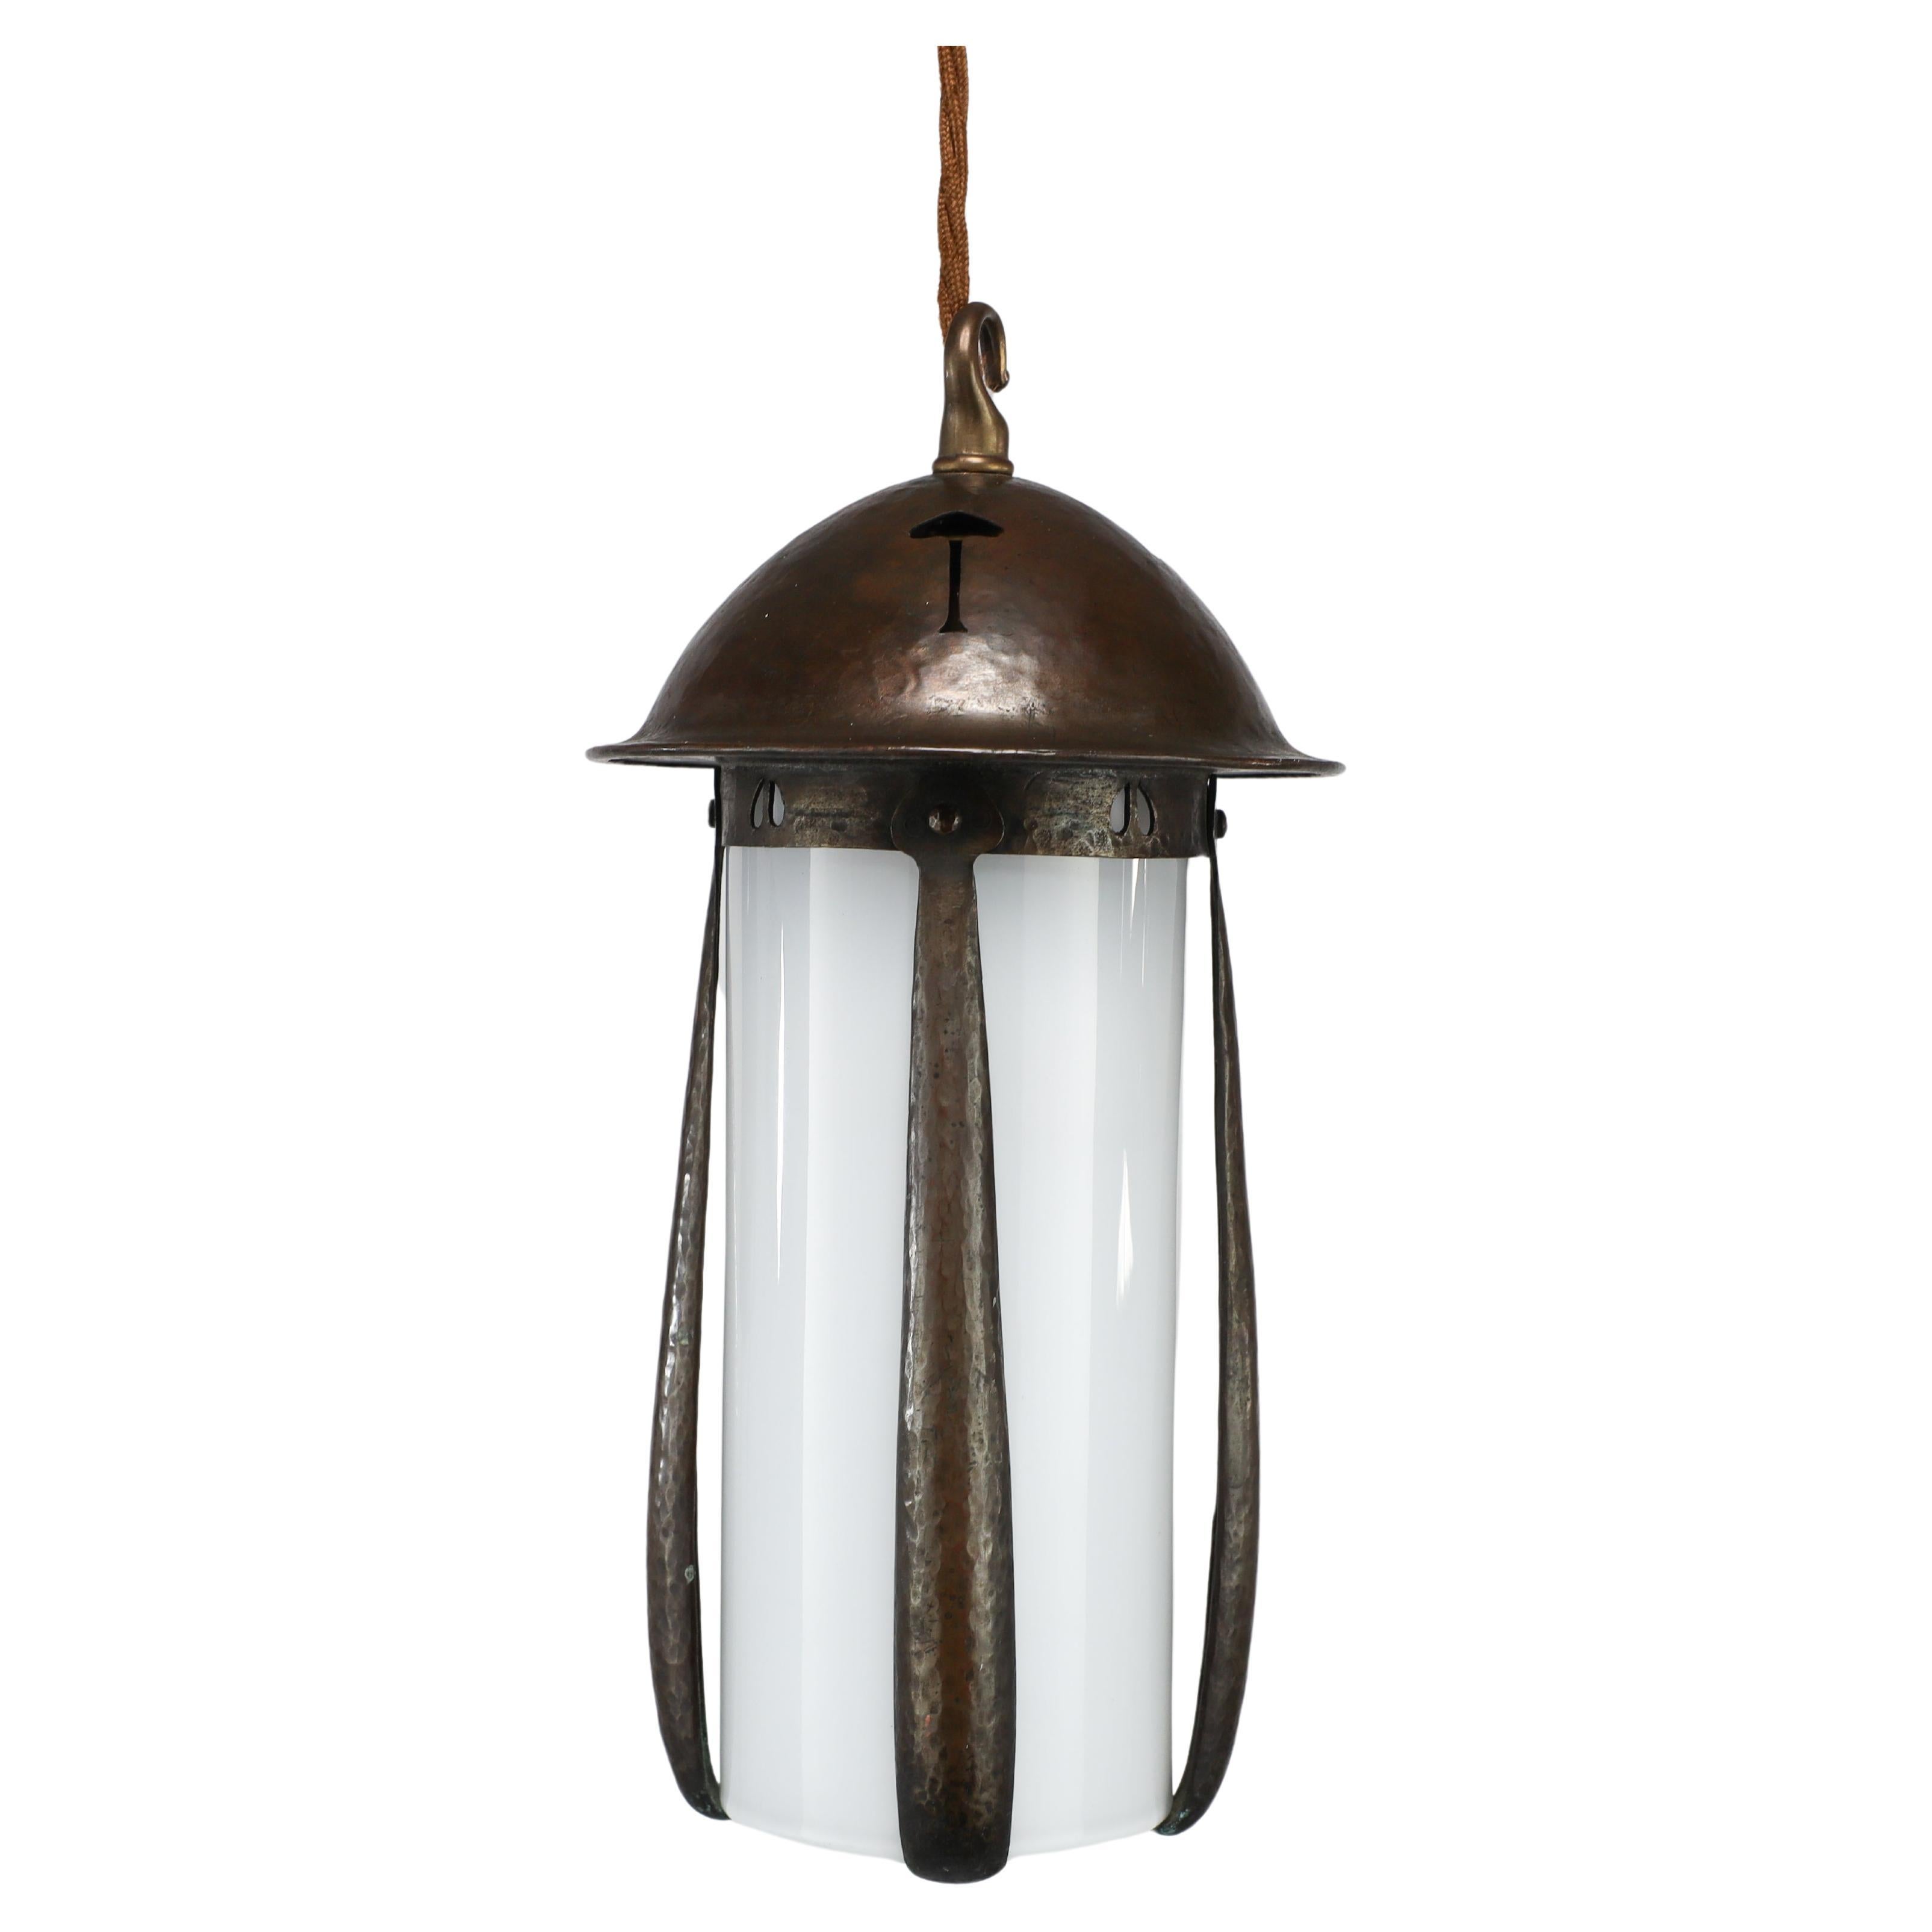 Gustav Stickley style. An Arts & Crafts hand hammered patinated copper lantern